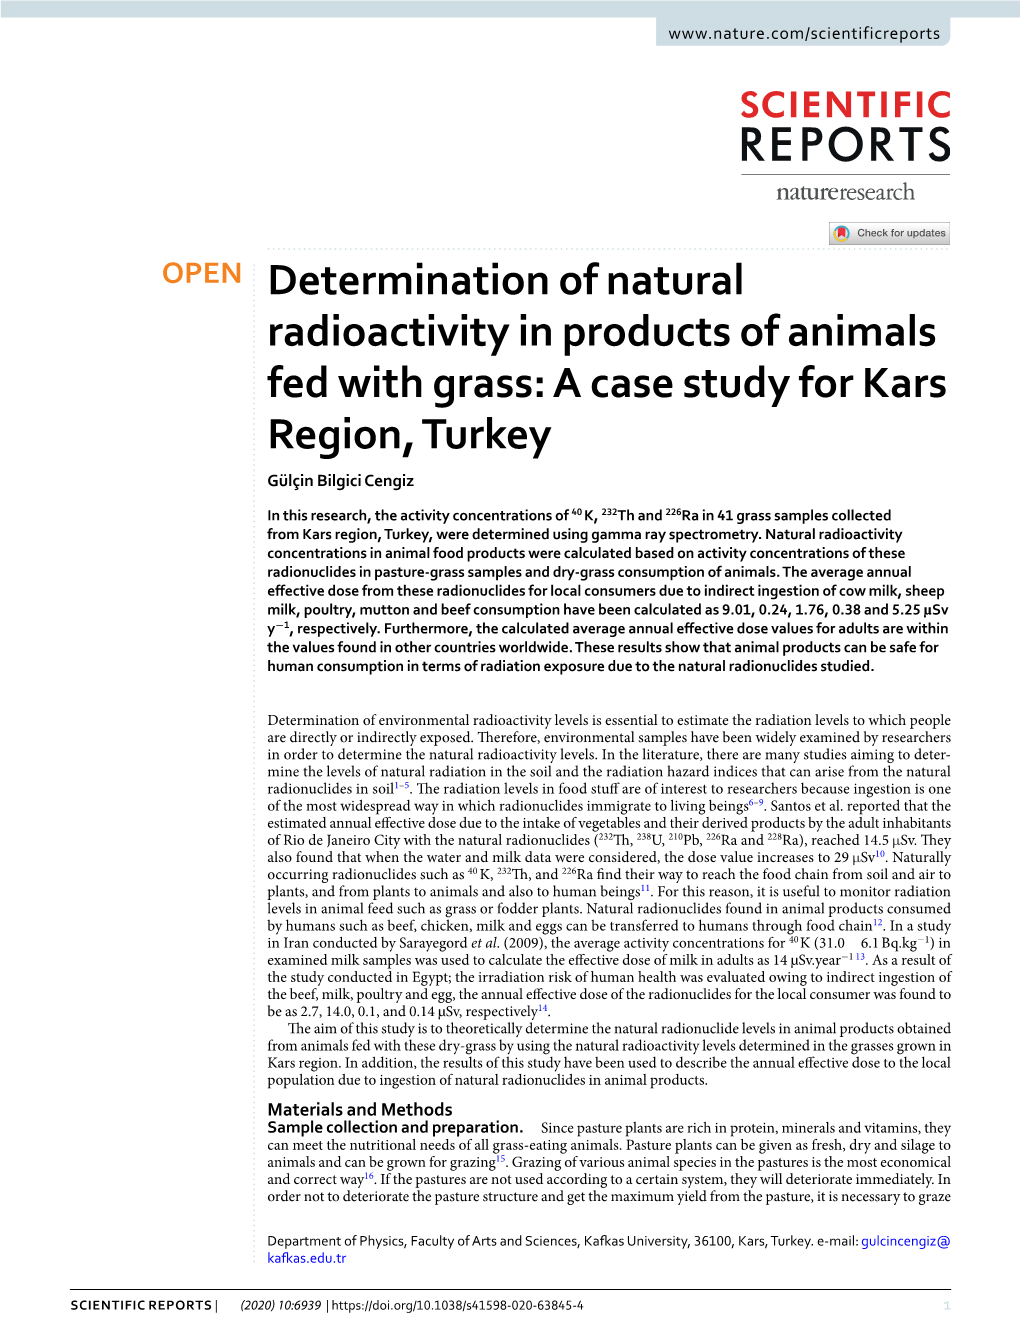 Determination of Natural Radioactivity in Products of Animals Fed with Grass: a Case Study for Kars Region, Turkey Gülçin Bilgici Cengiz